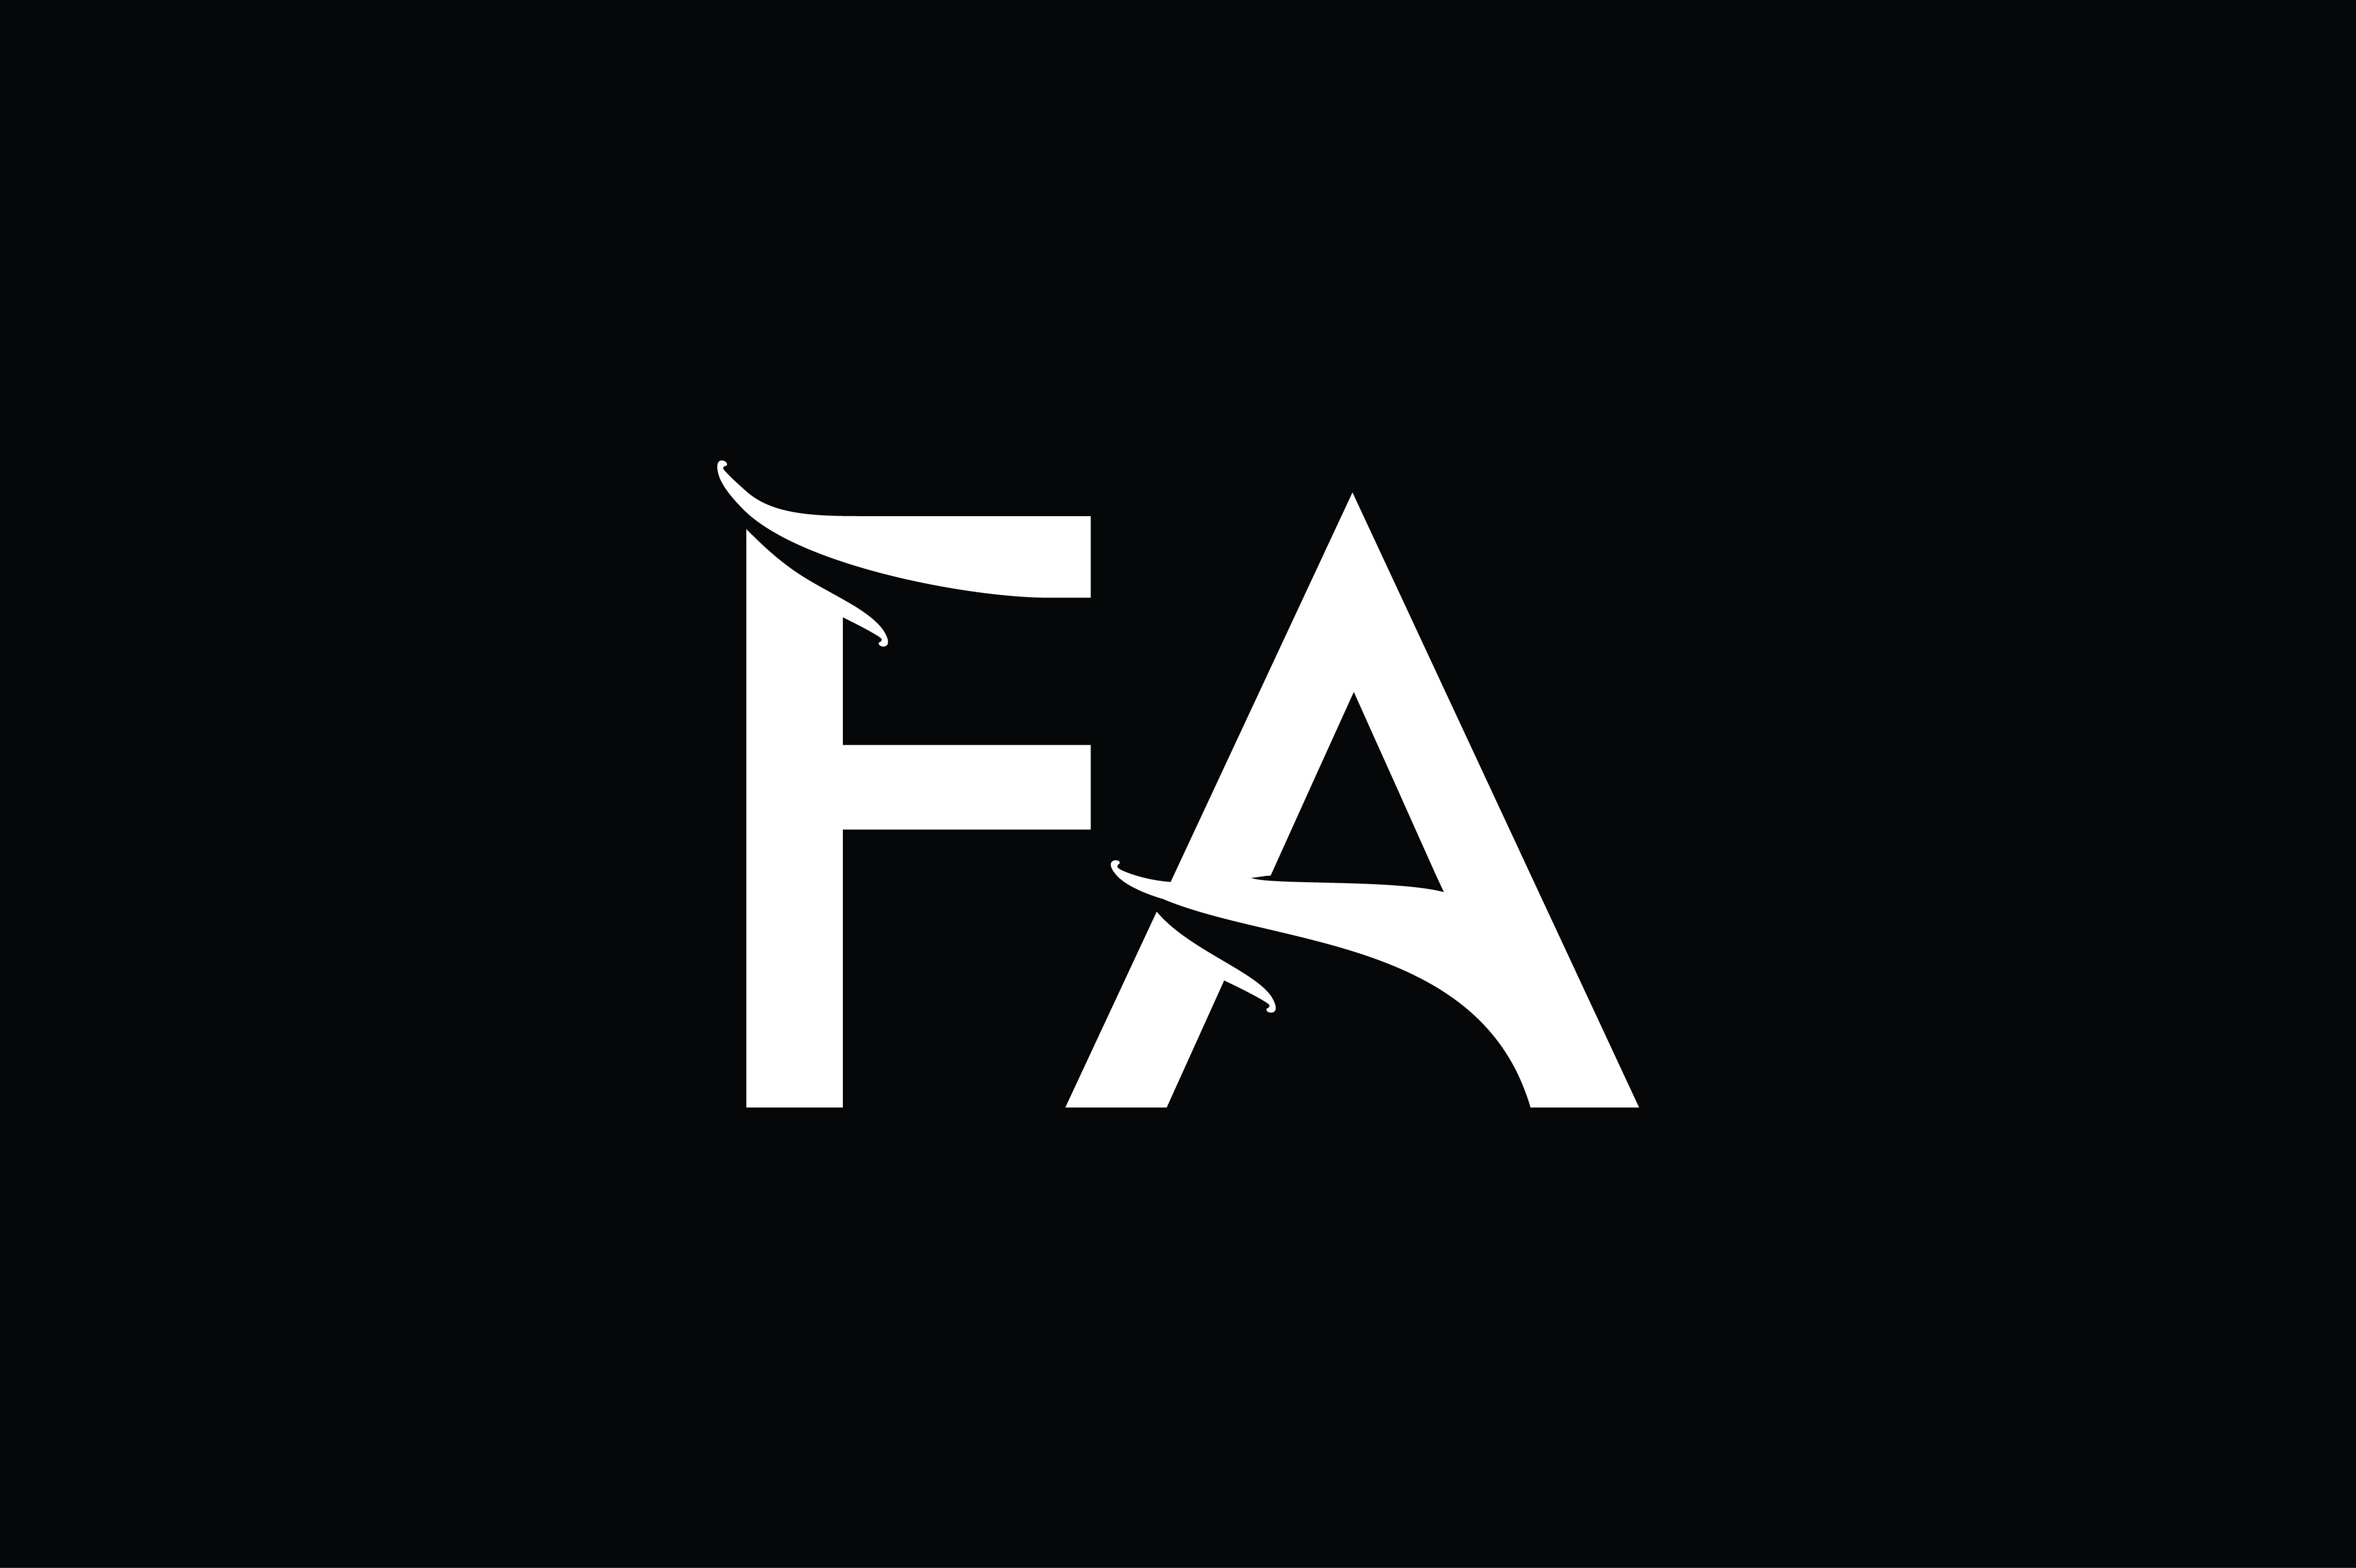  FA Monogram Logo Design By Vectorseller TheHungryJPEG